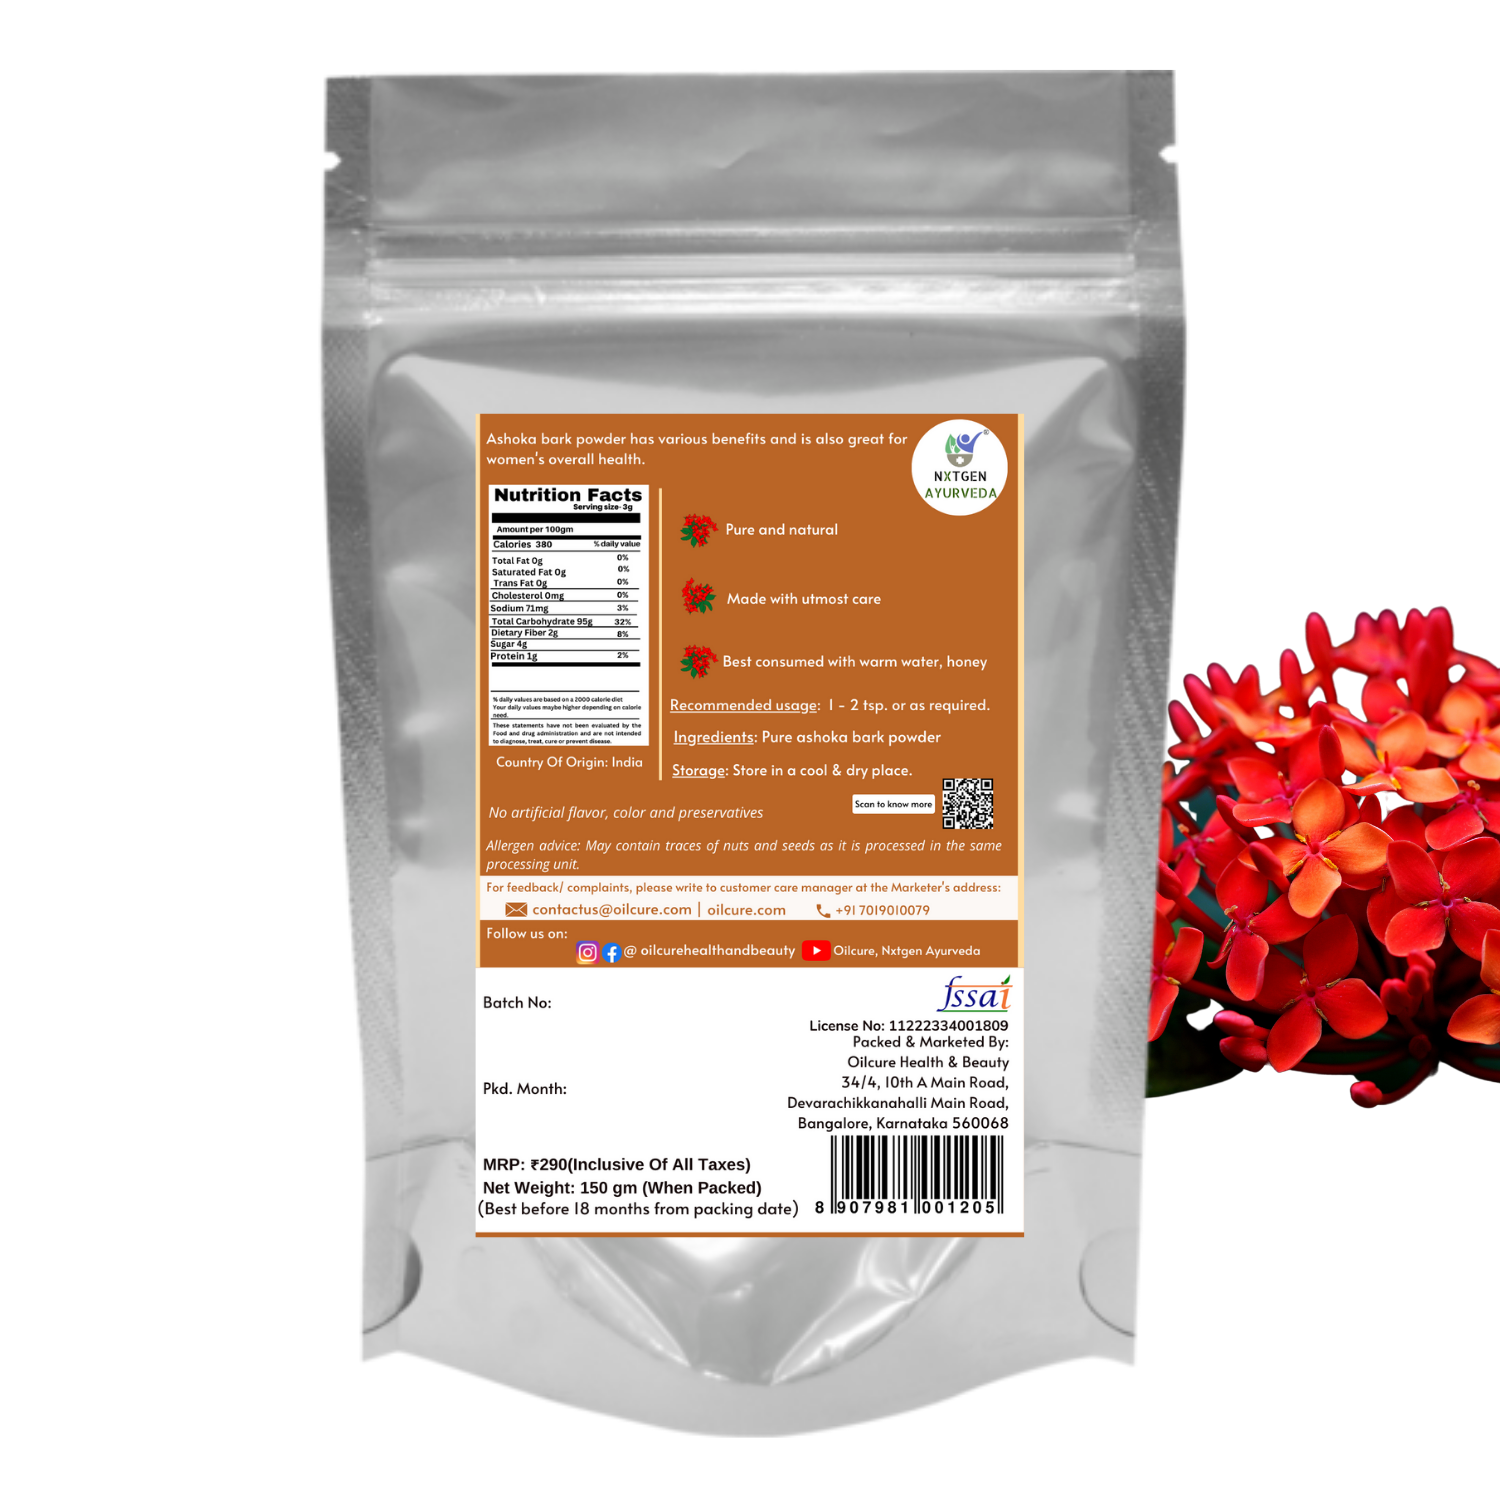 Nxtgen Ayurveda Ashoka Bark Powder - 150 gms (Pack of 2)